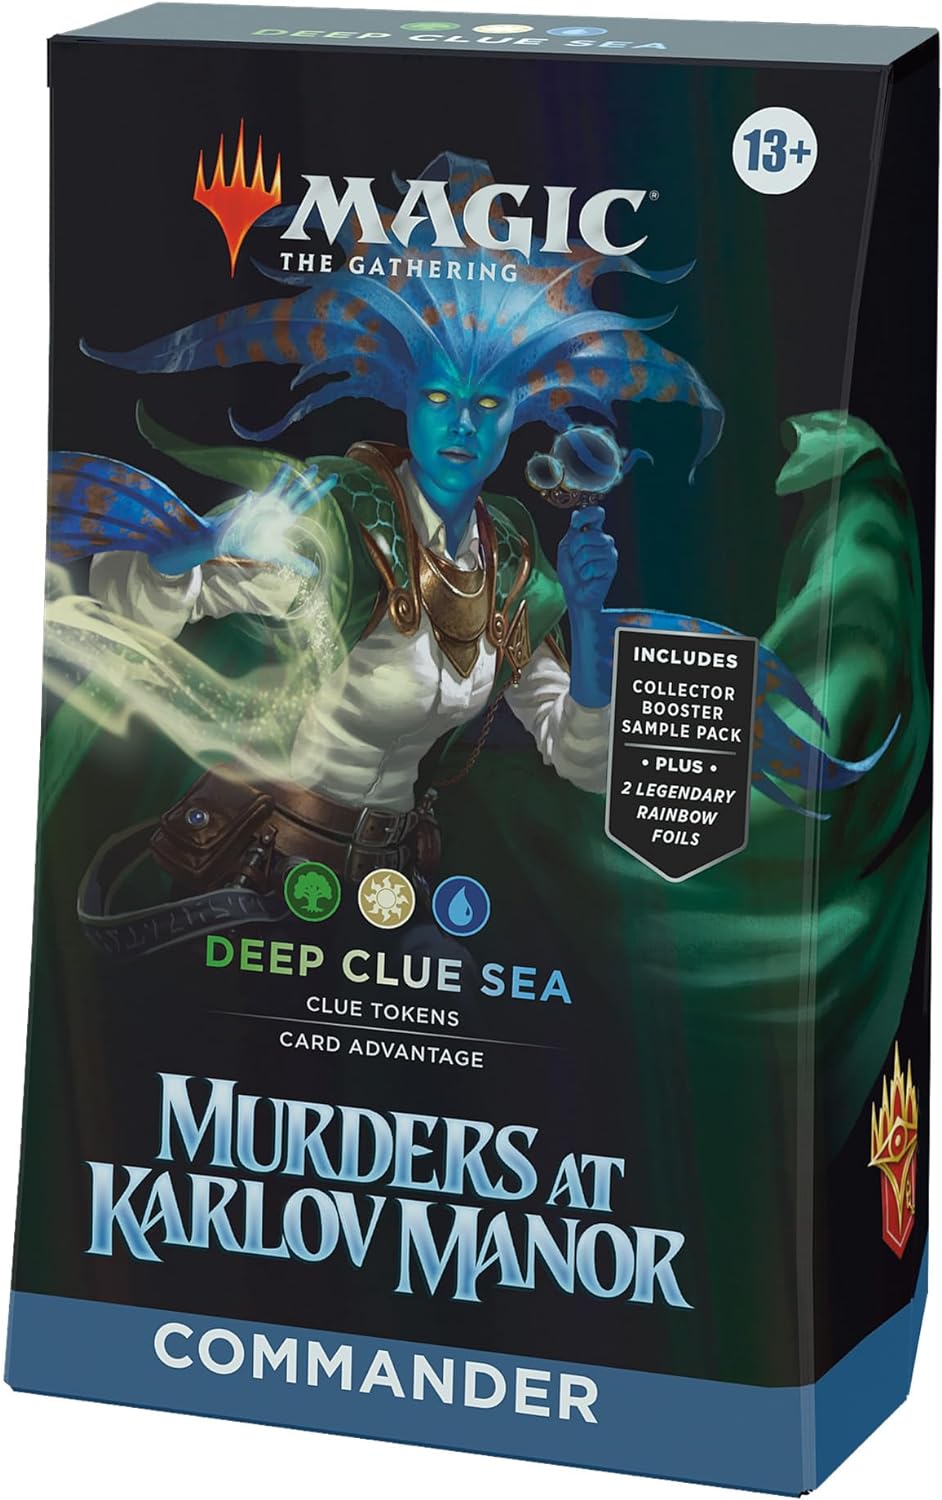 Magic: The Gathering Murders at Karlov Manor Commander Deck - Deep Clue Sea - gabescaveccc